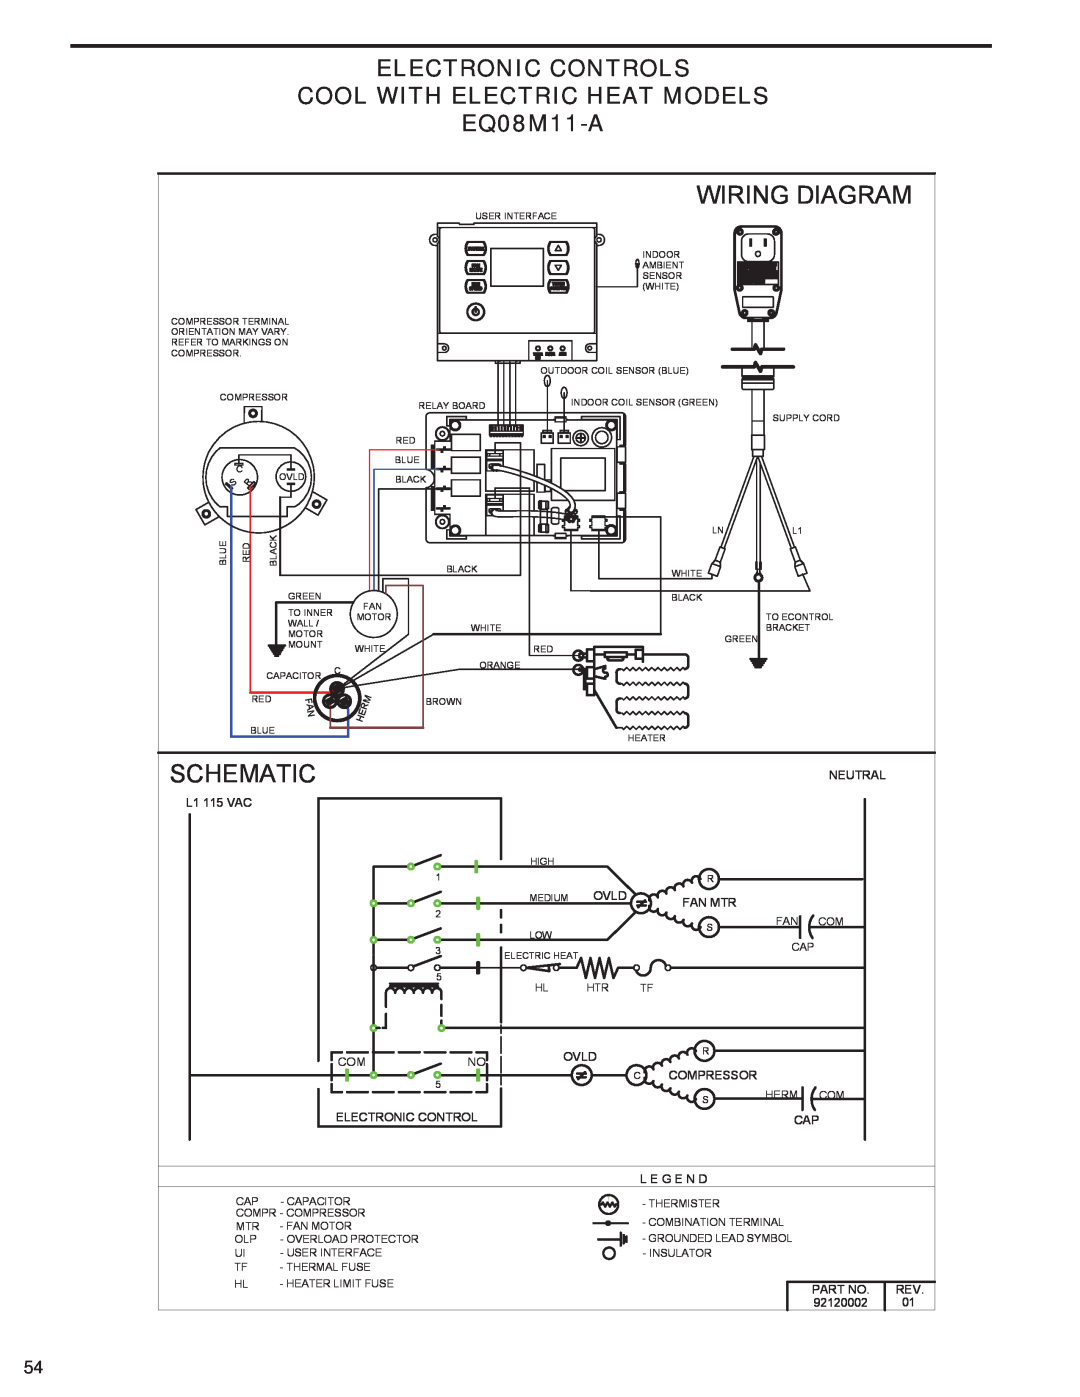 Friedrich SQ10N10, SQ08N10 manual Wiring Diagram, Schematic, Electronic Controls, COOL WITH ELECTRIC HEAT MODELS EQ08M11-A 